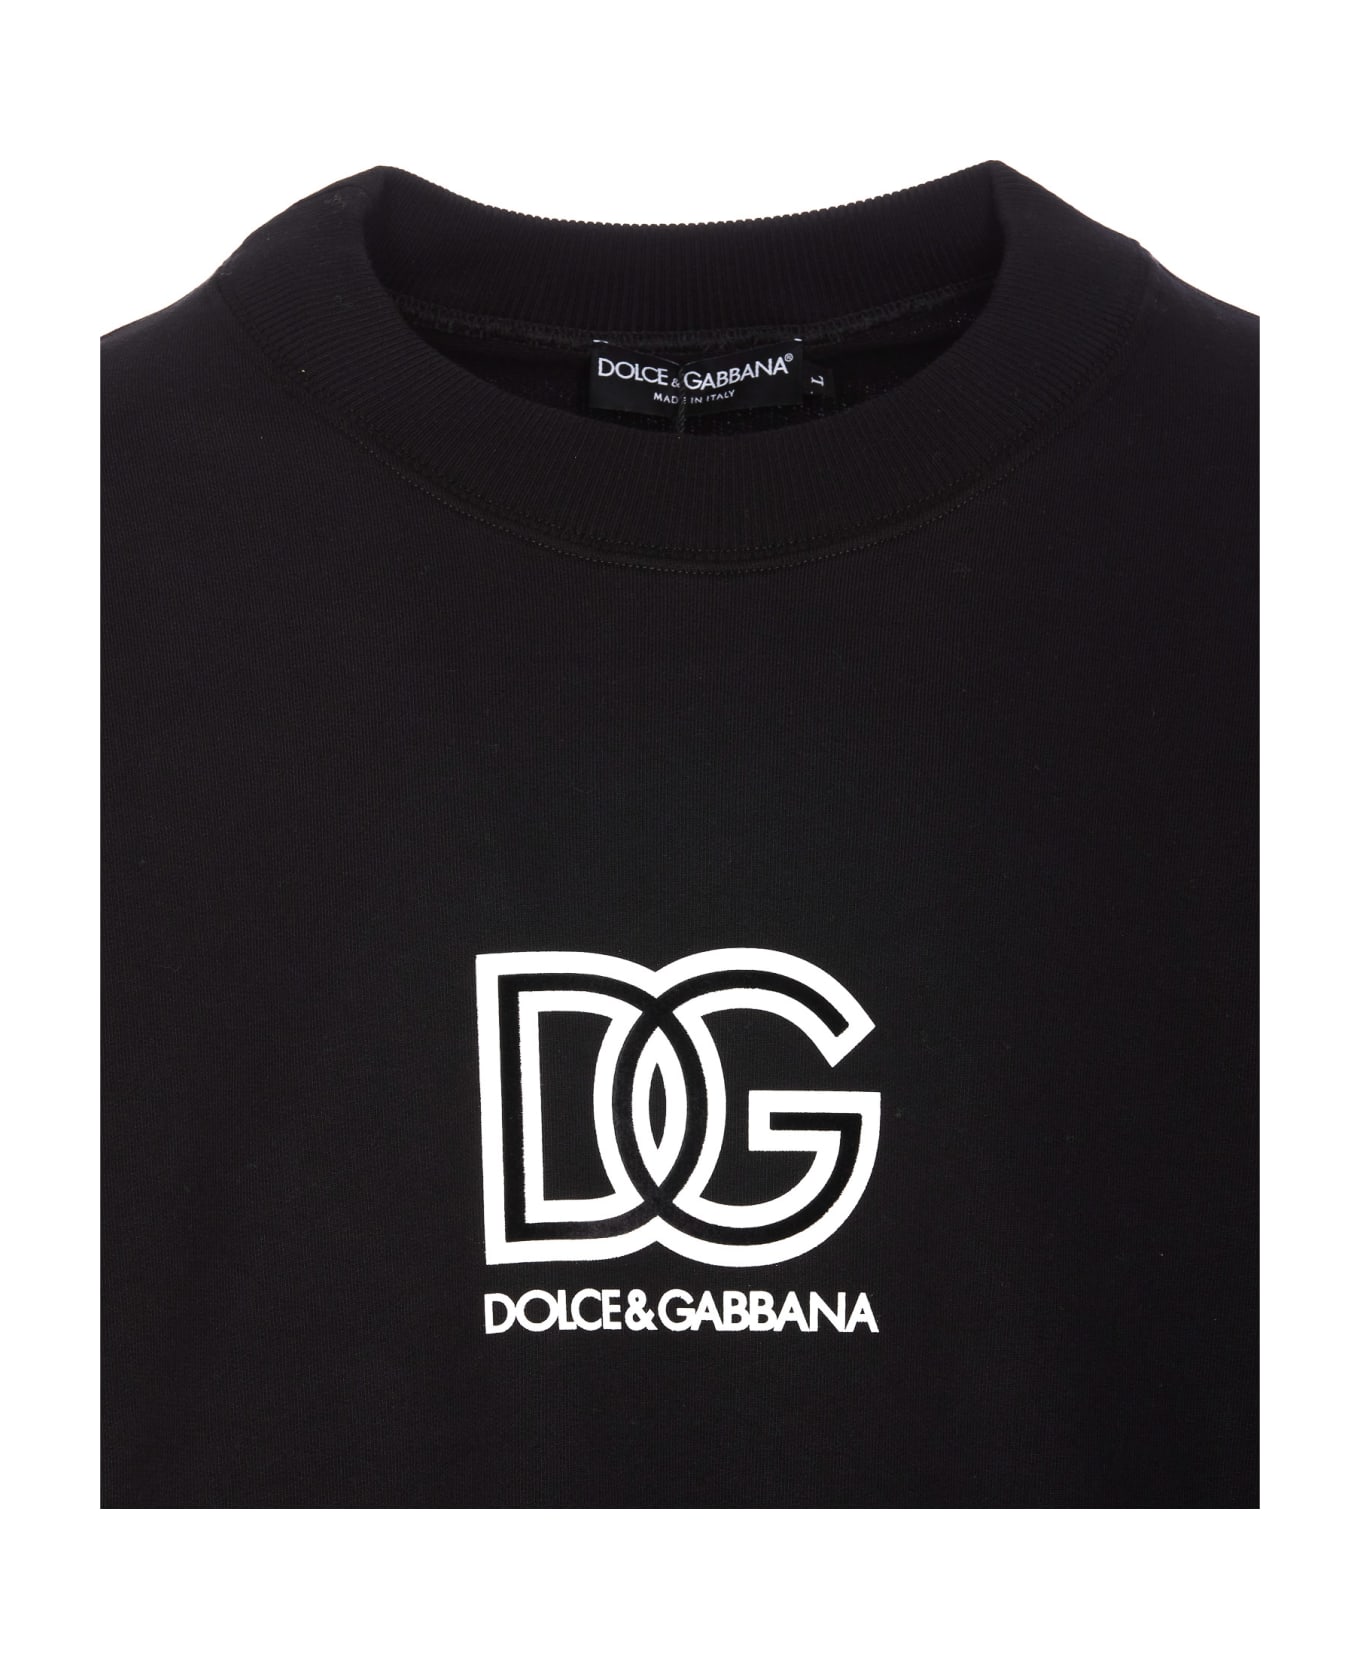 Dolce & Gabbana Dg Logo Printed Crewneck Sweatshirt - Black